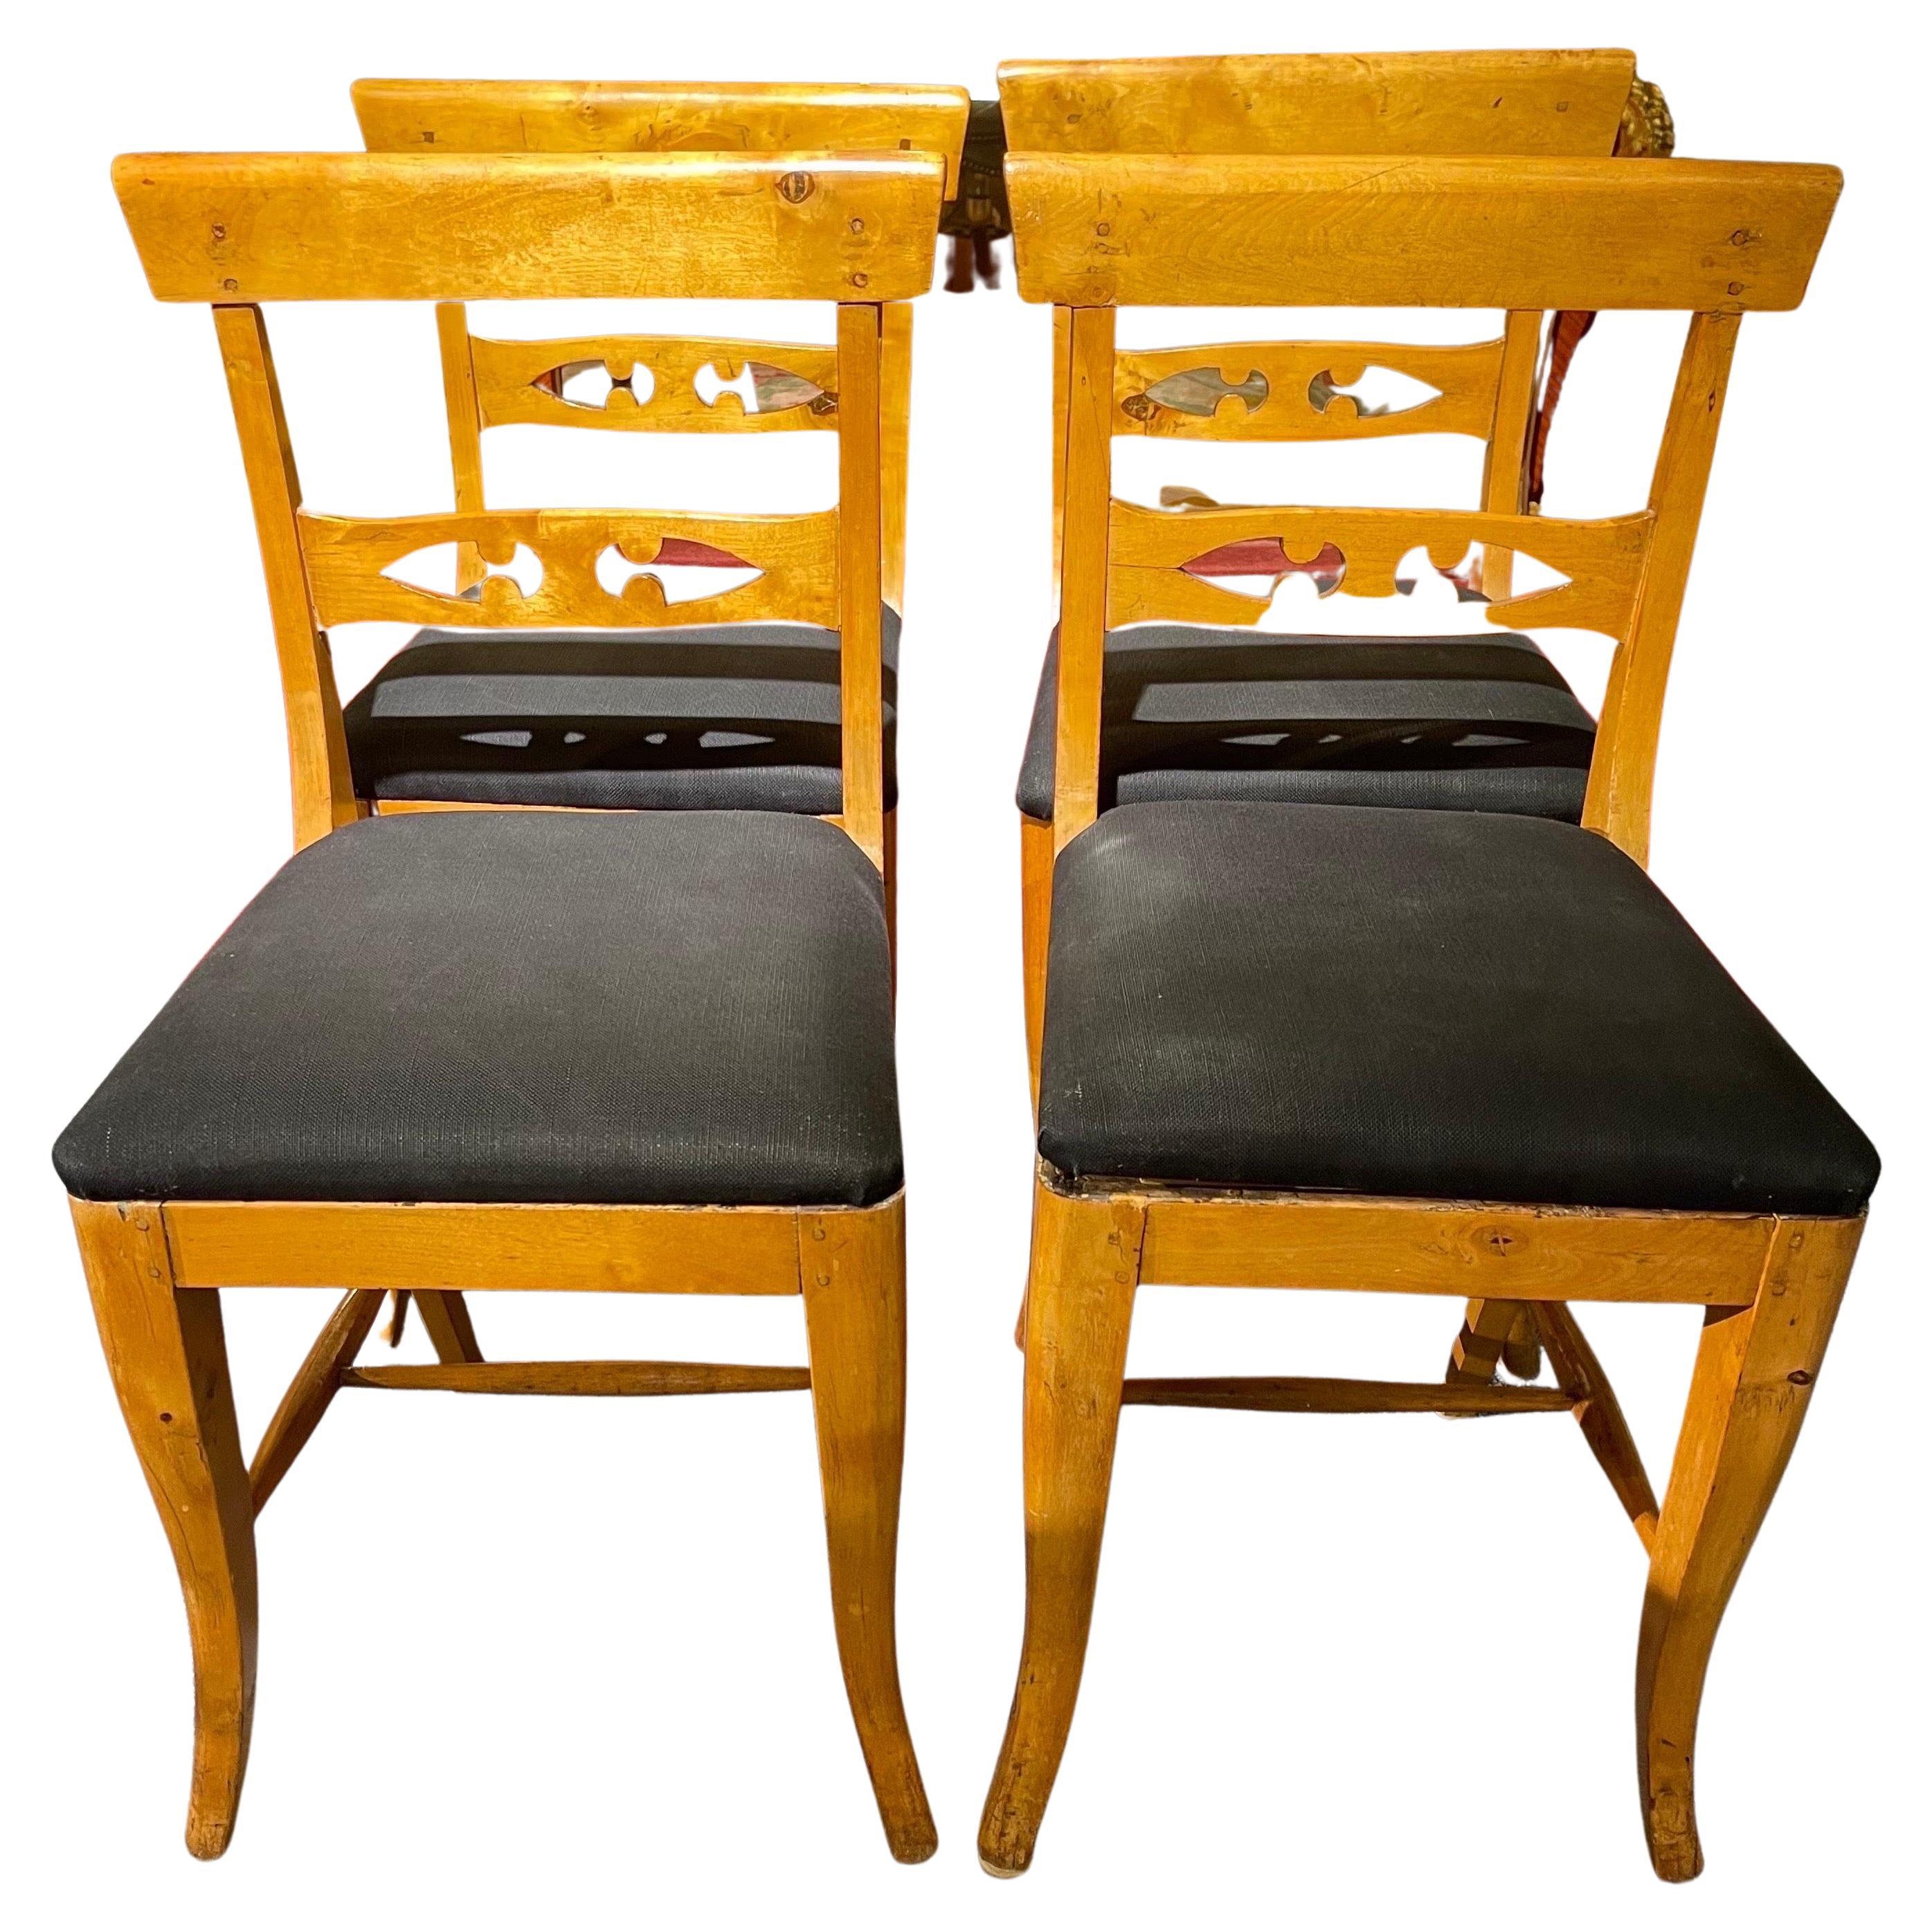 Beautiful Set of 4 Biedermeier Chairs from Around 1860